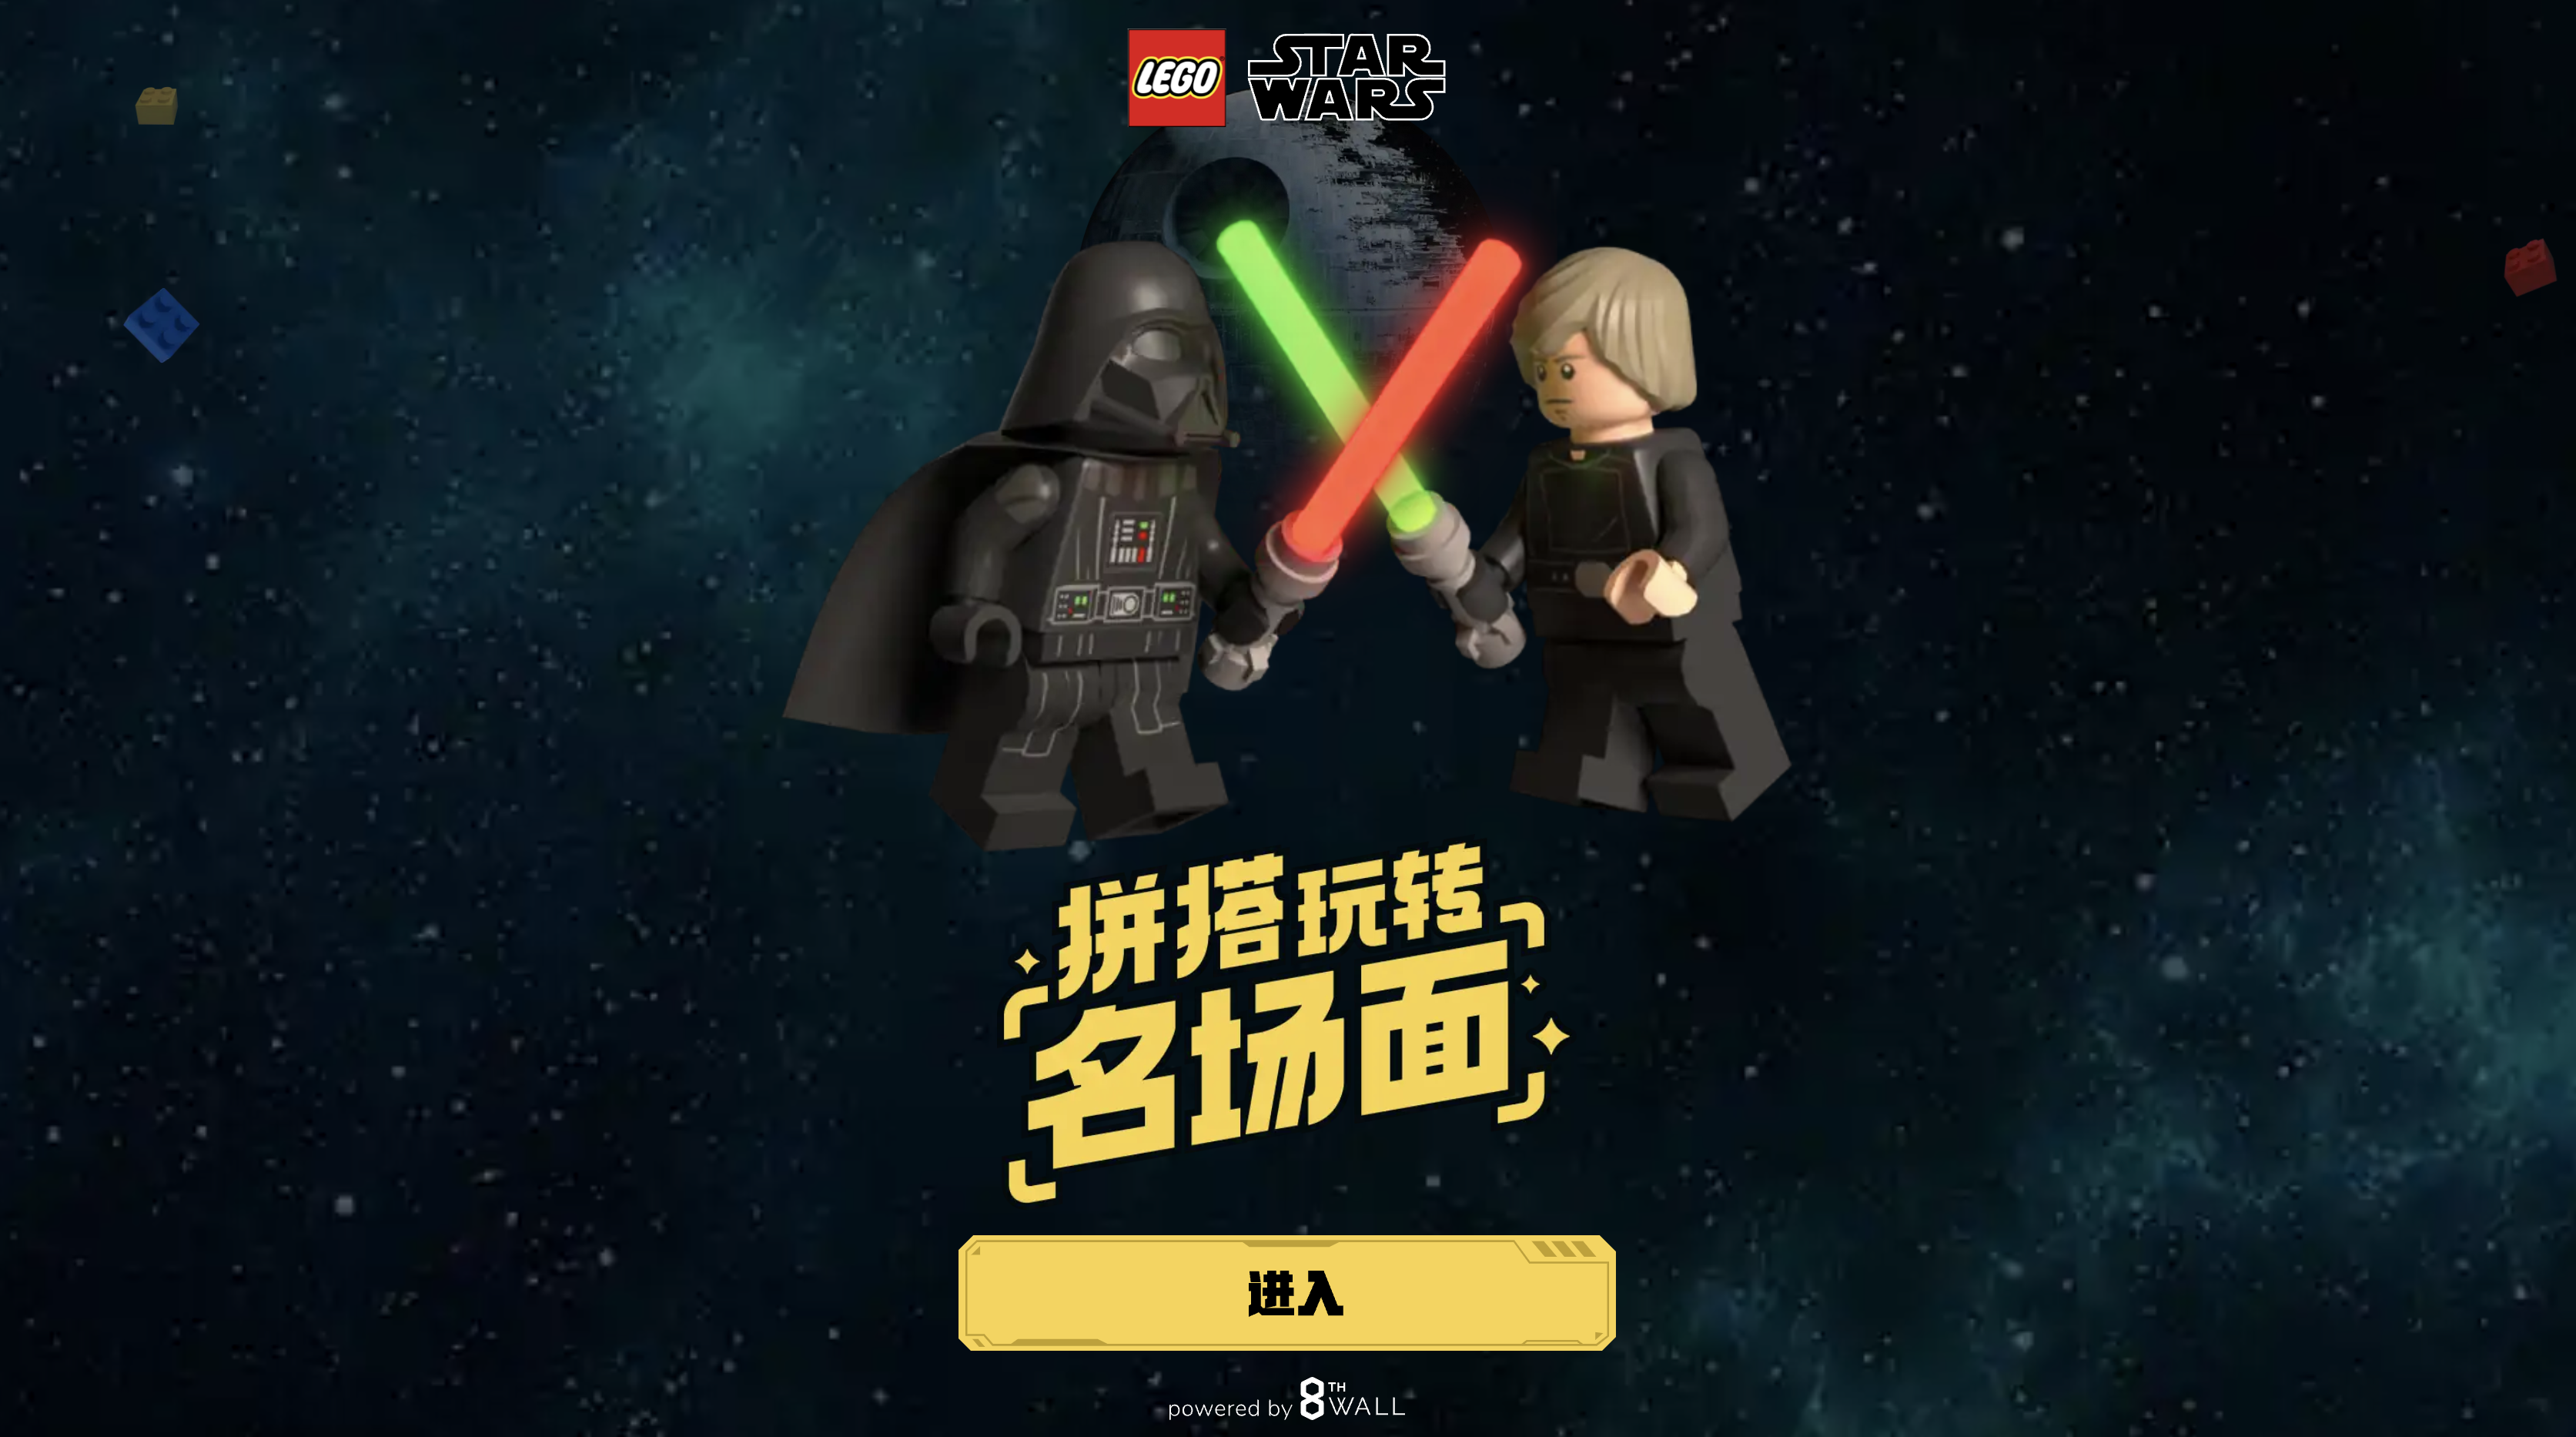 Lego Star Wars AR Experience